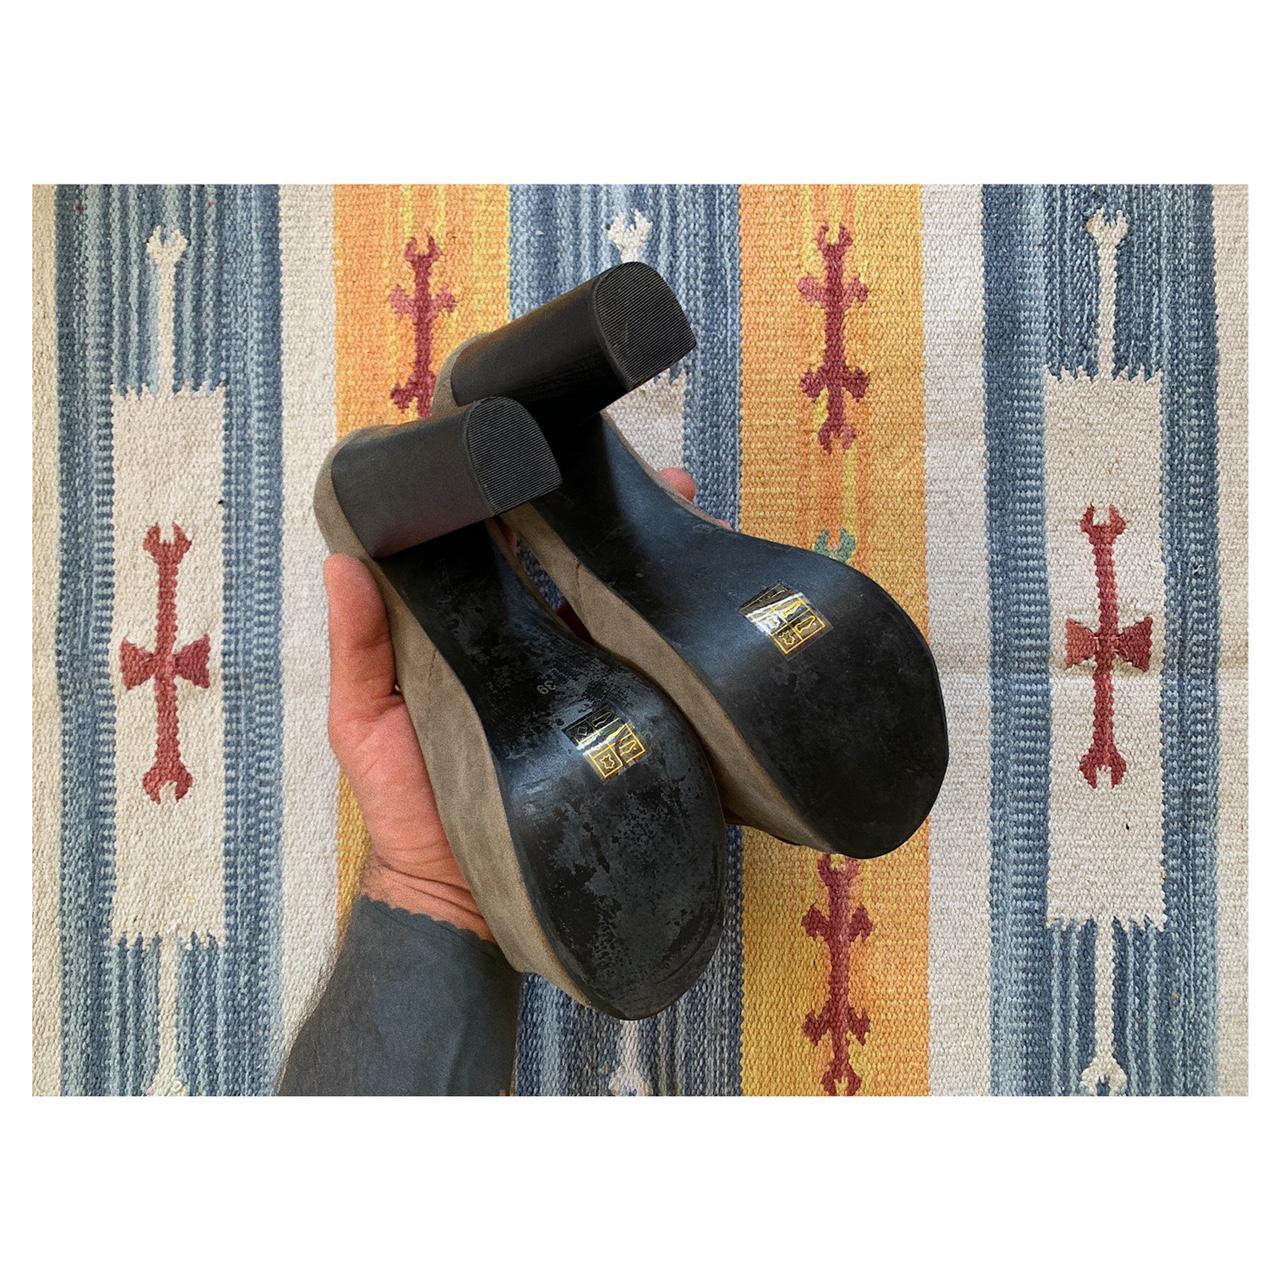 Product Image 3 - ❣️JEFFREY CAMPBELL FOXY❣️

Brand #jeffreycampbell
Size EU39/